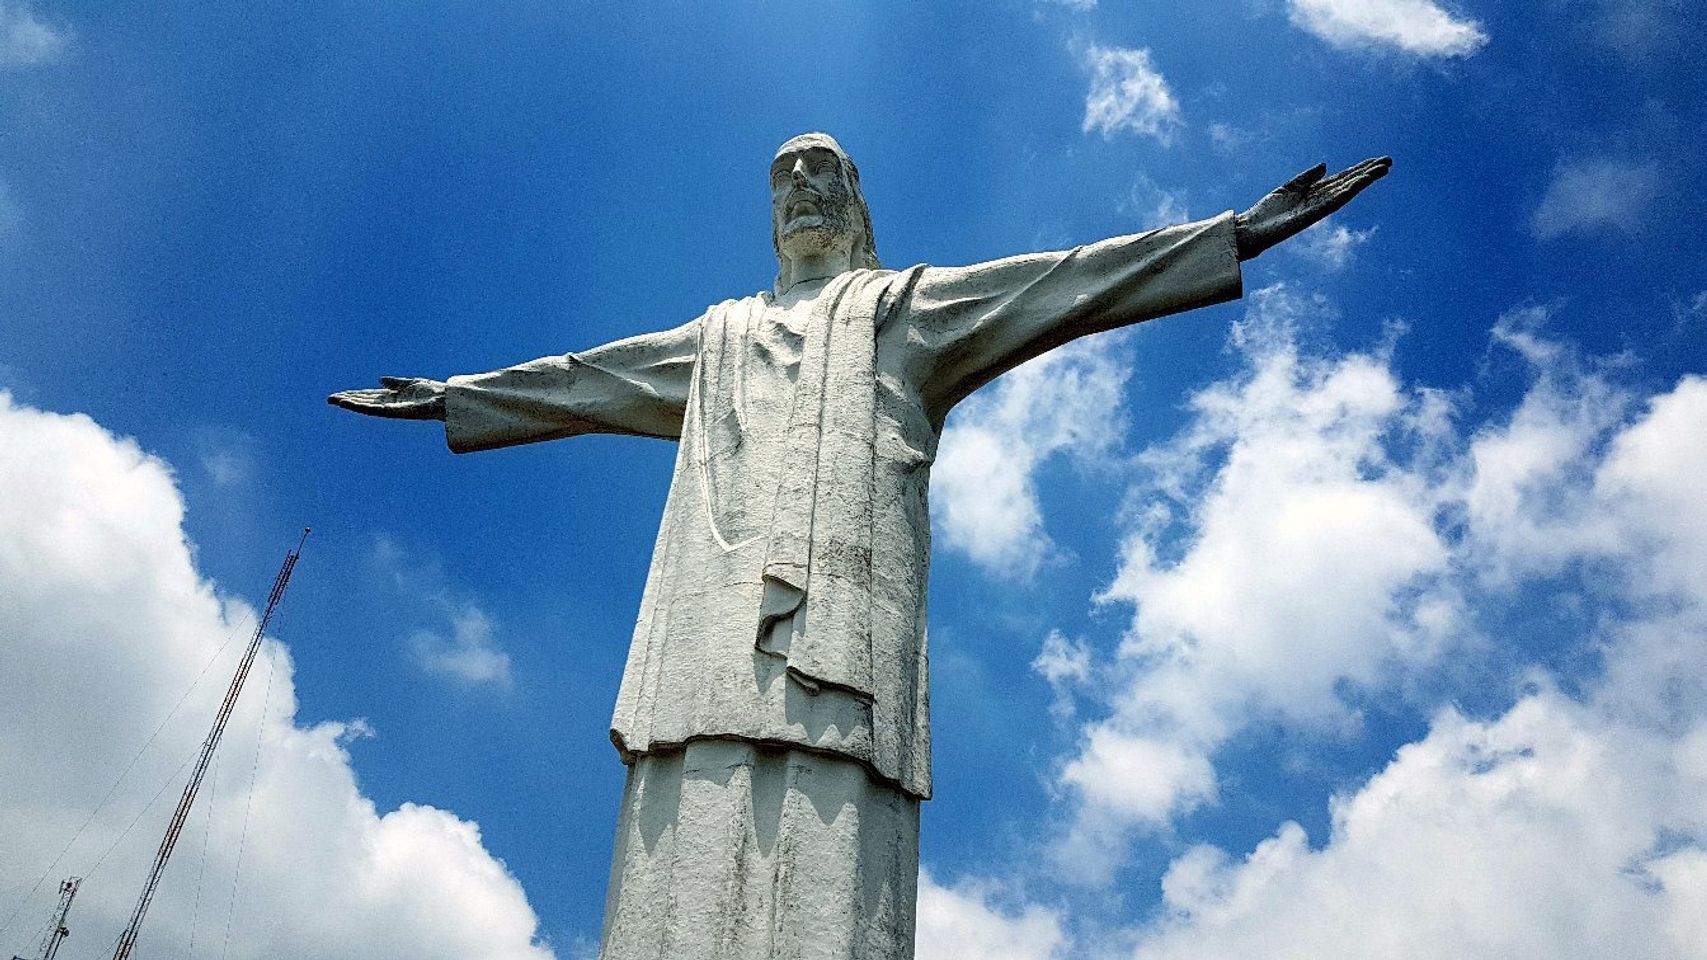 Visit the Cristo Rey statue